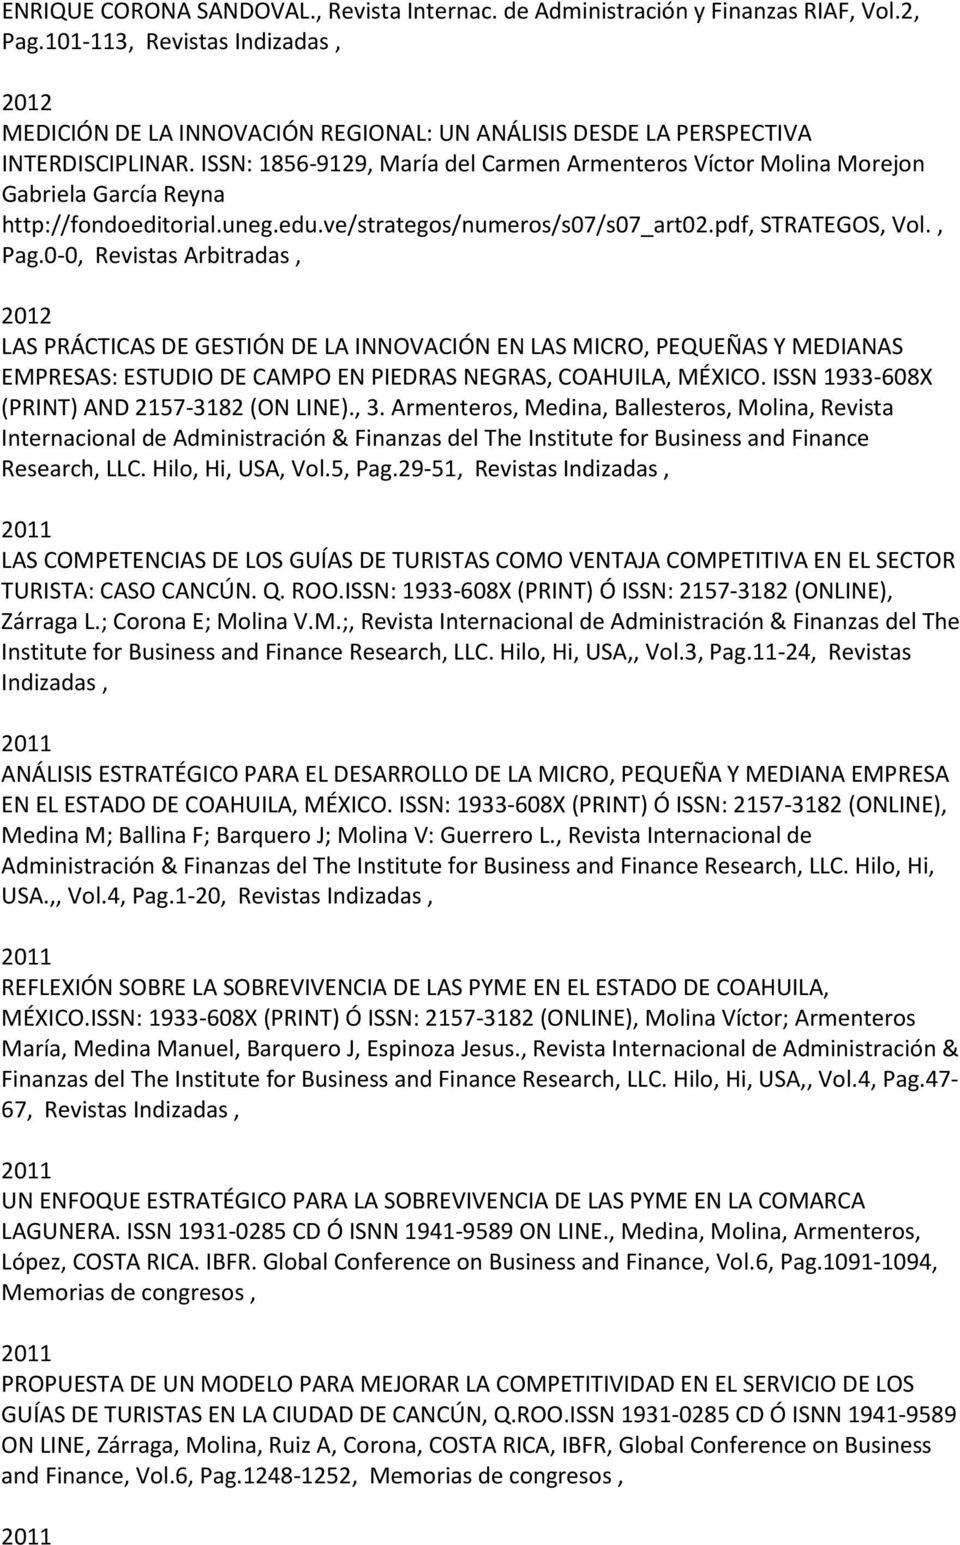 ISSN: 1856-9129, María del Carmen Armenteros Víctor Molina Morejon Gabriela García Reyna http://fondoeditorial.uneg.edu.ve/strategos/numeros/s07/s07_art02.pdf, STRATEGOS, Vol., Pag.